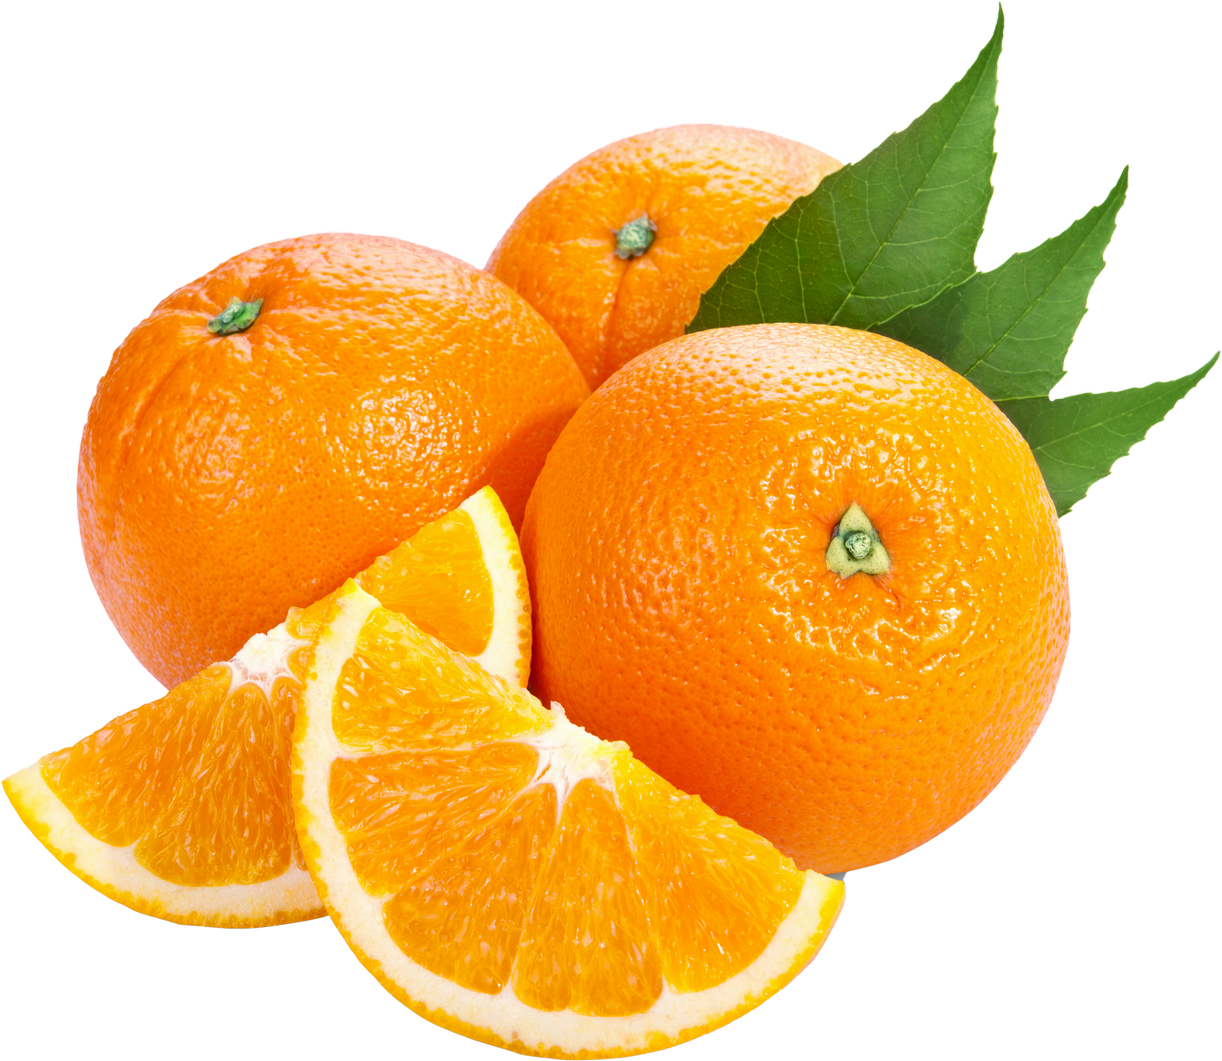 Download Orange Orange Png Image For Free